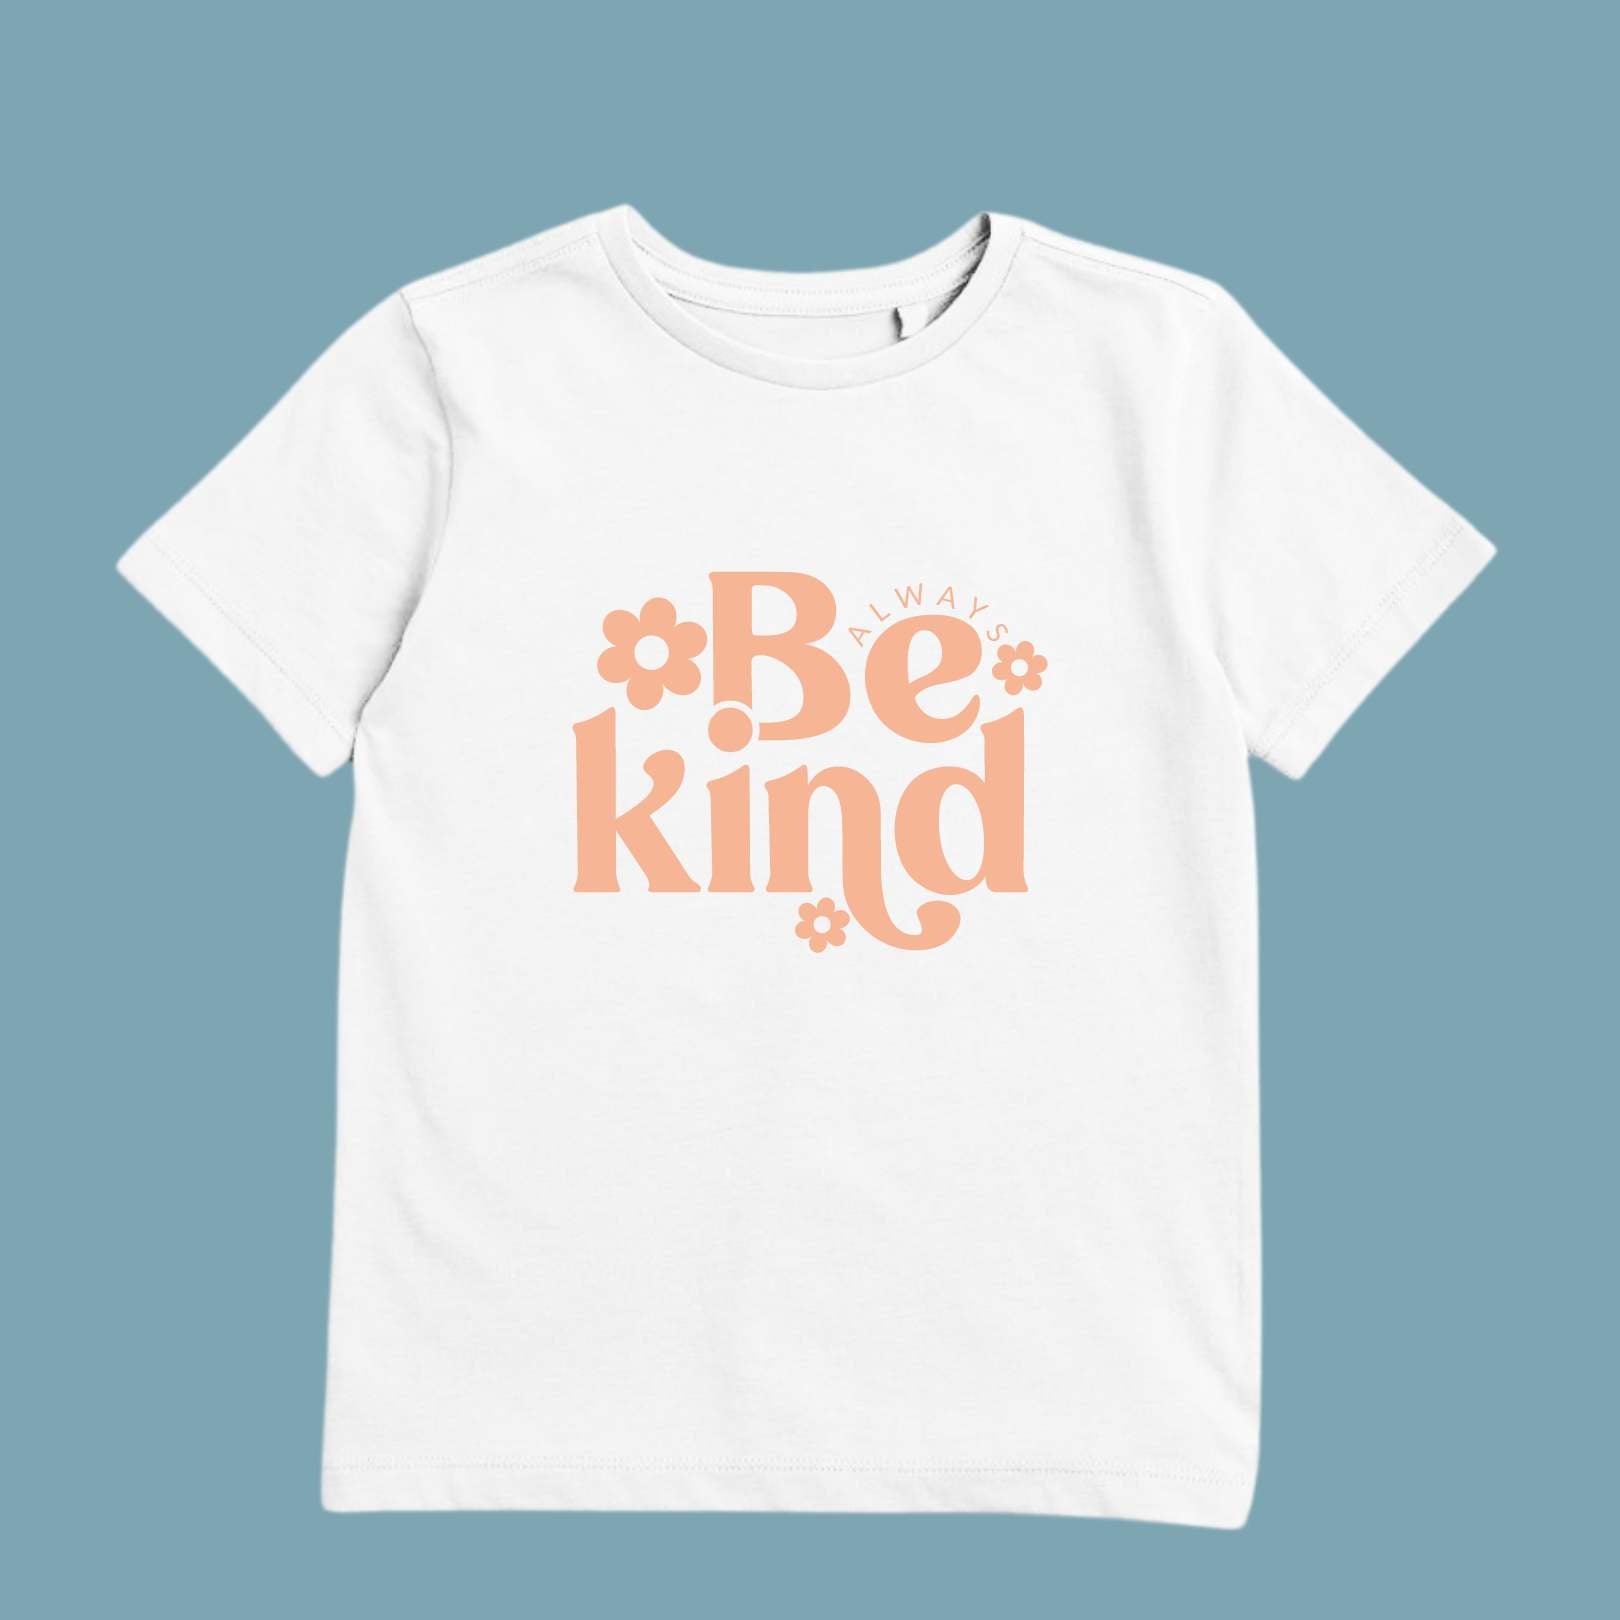 Always be kind. Harmony Day Tshirt. Made. By Bronte. Orange Shirt. Teachers & Adults